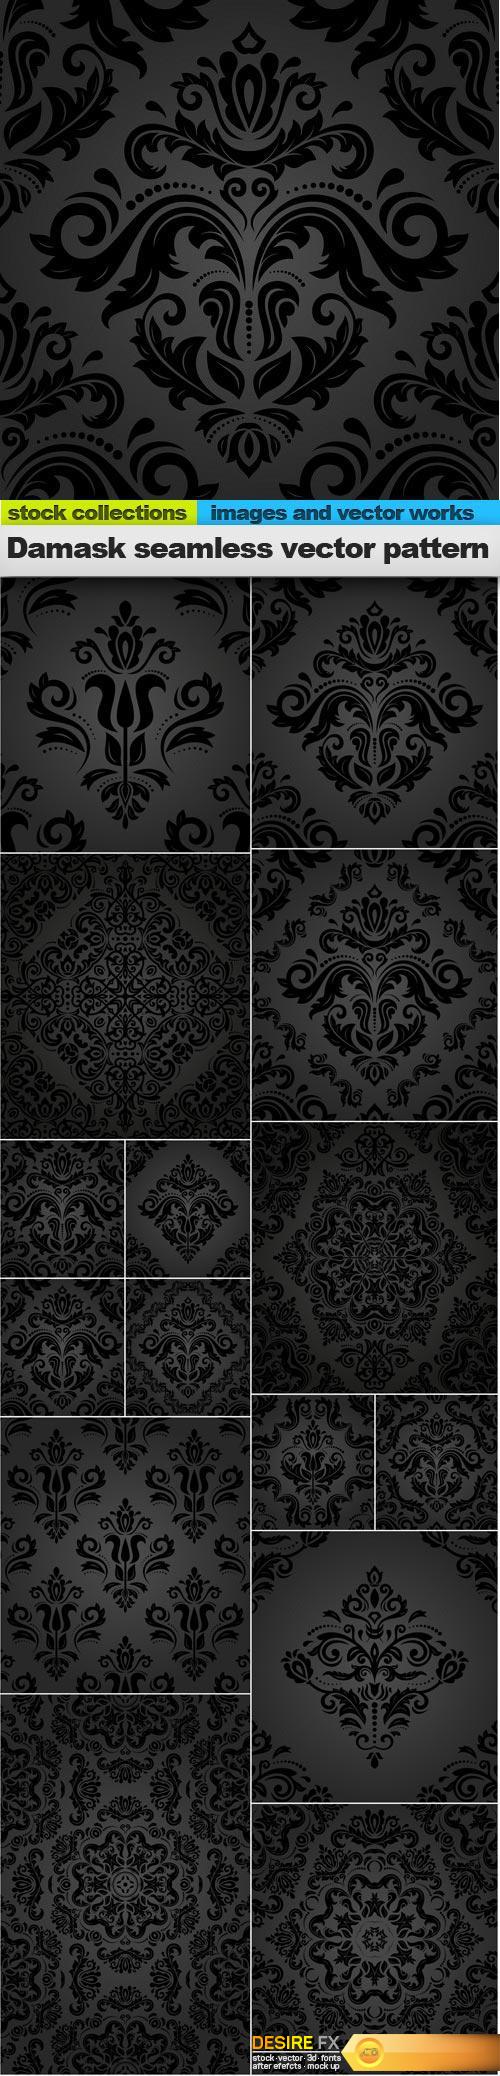 Damask seamless vector pattern, 15 x EPS